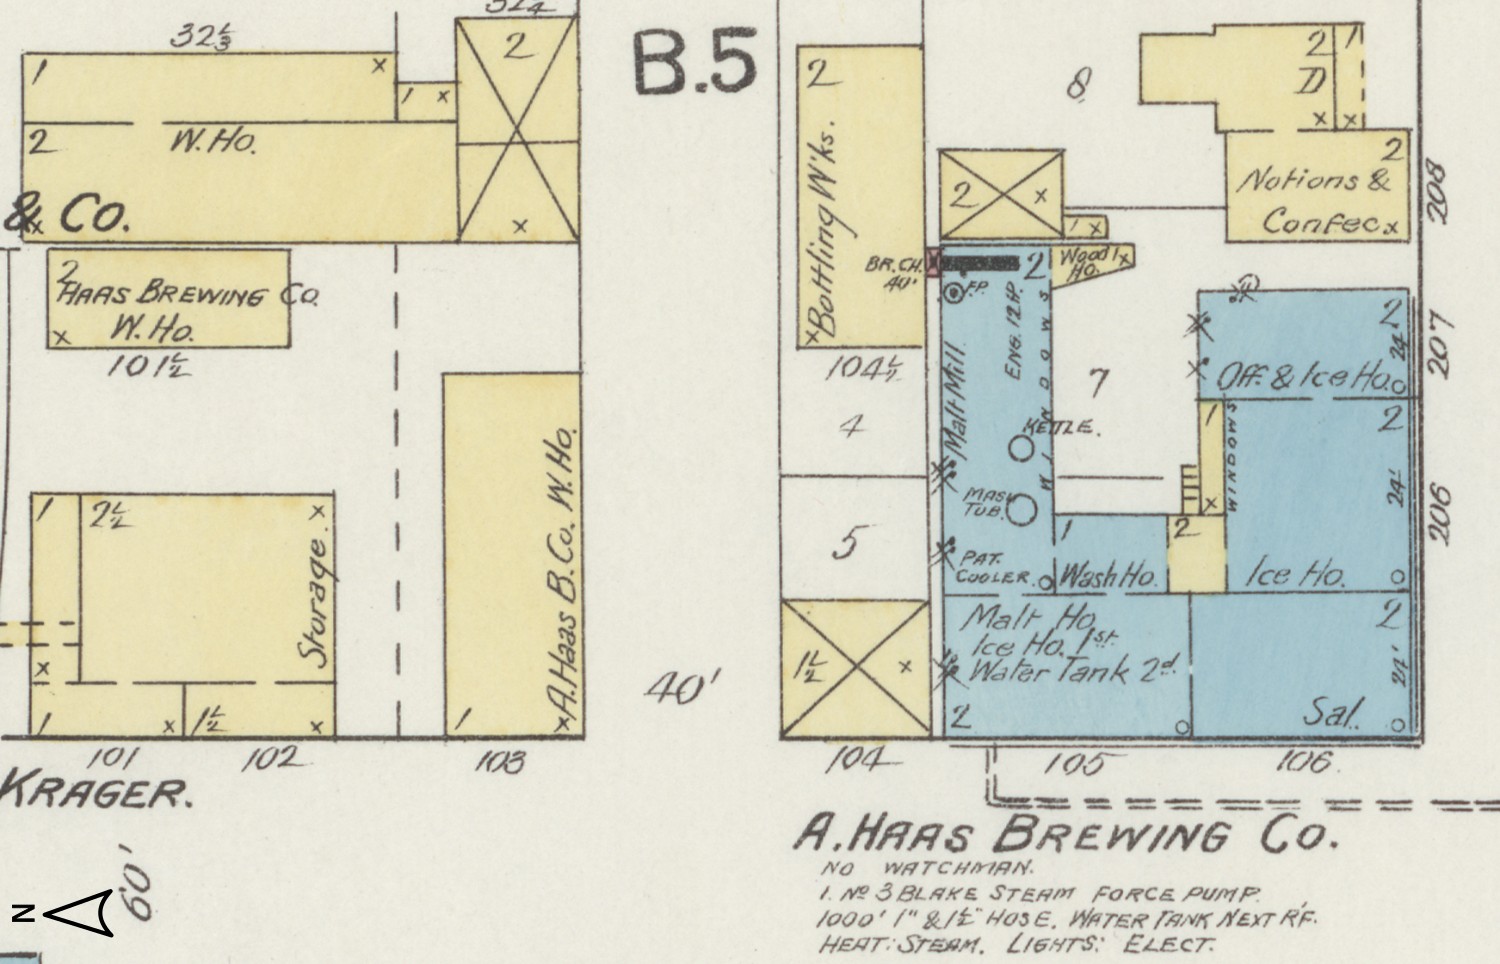 Sanborn map - Aug 1893